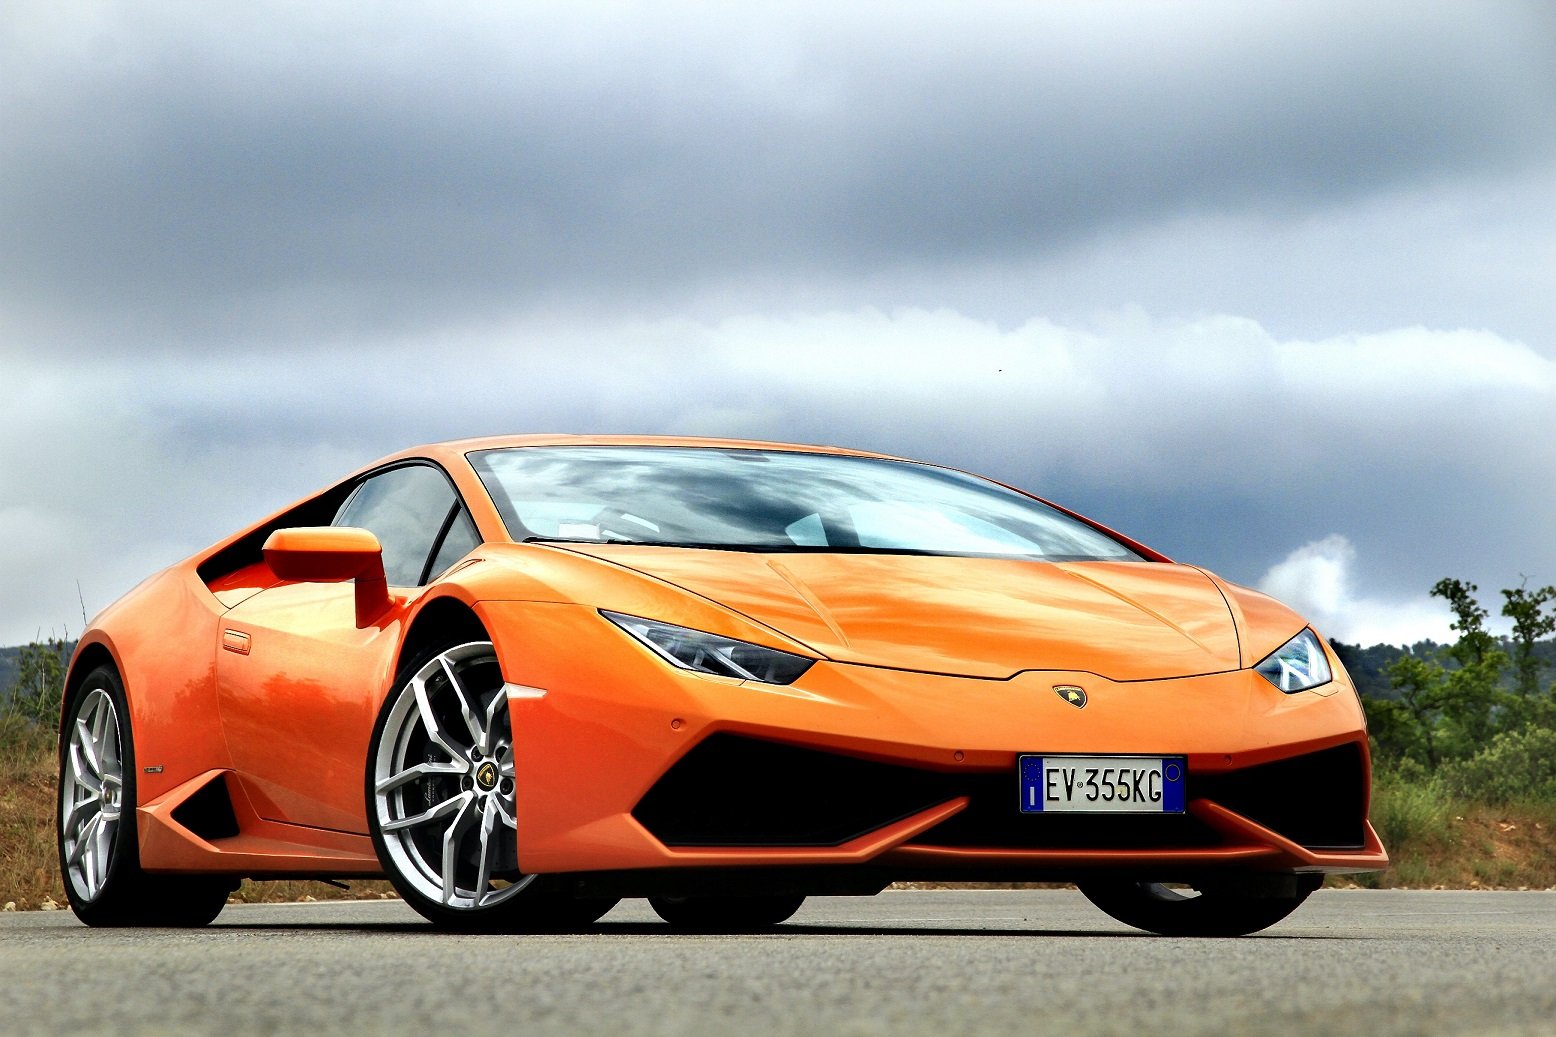 2014, 610, 4, Huracan, Lamborghini, Lb724, Orange, Supercar Wallpaper